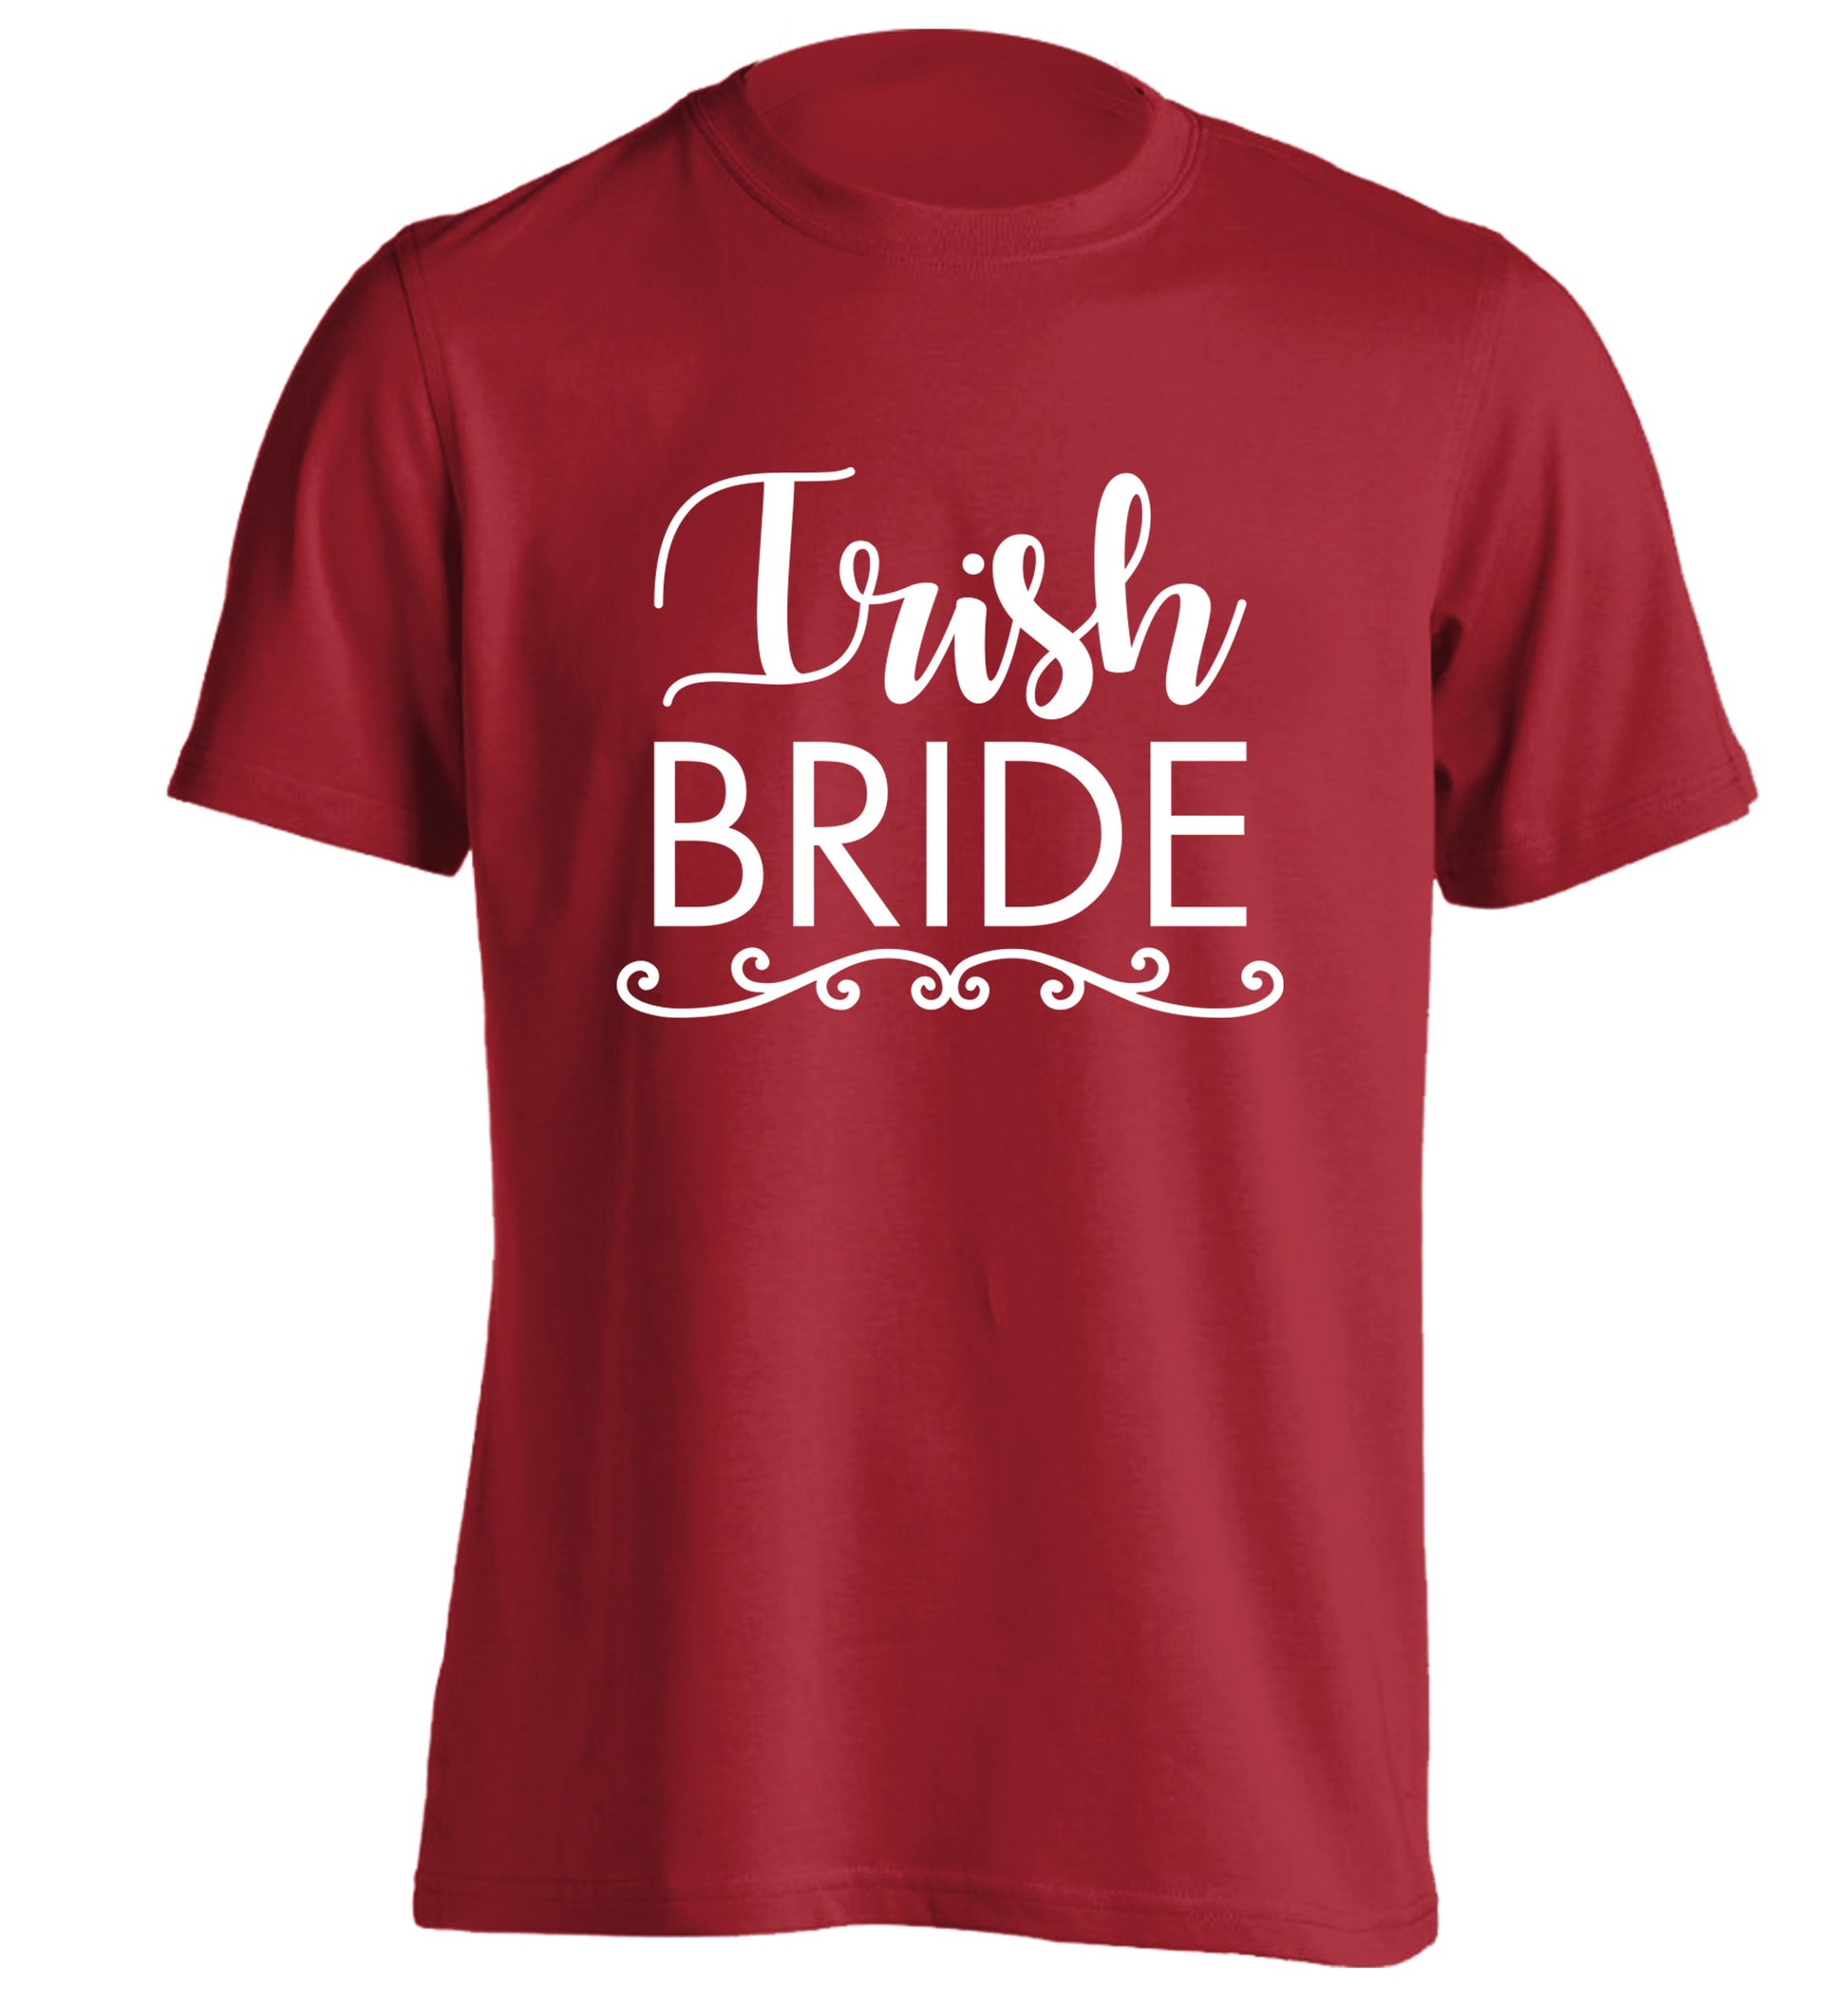 Irish bride adults unisex red Tshirt 2XL